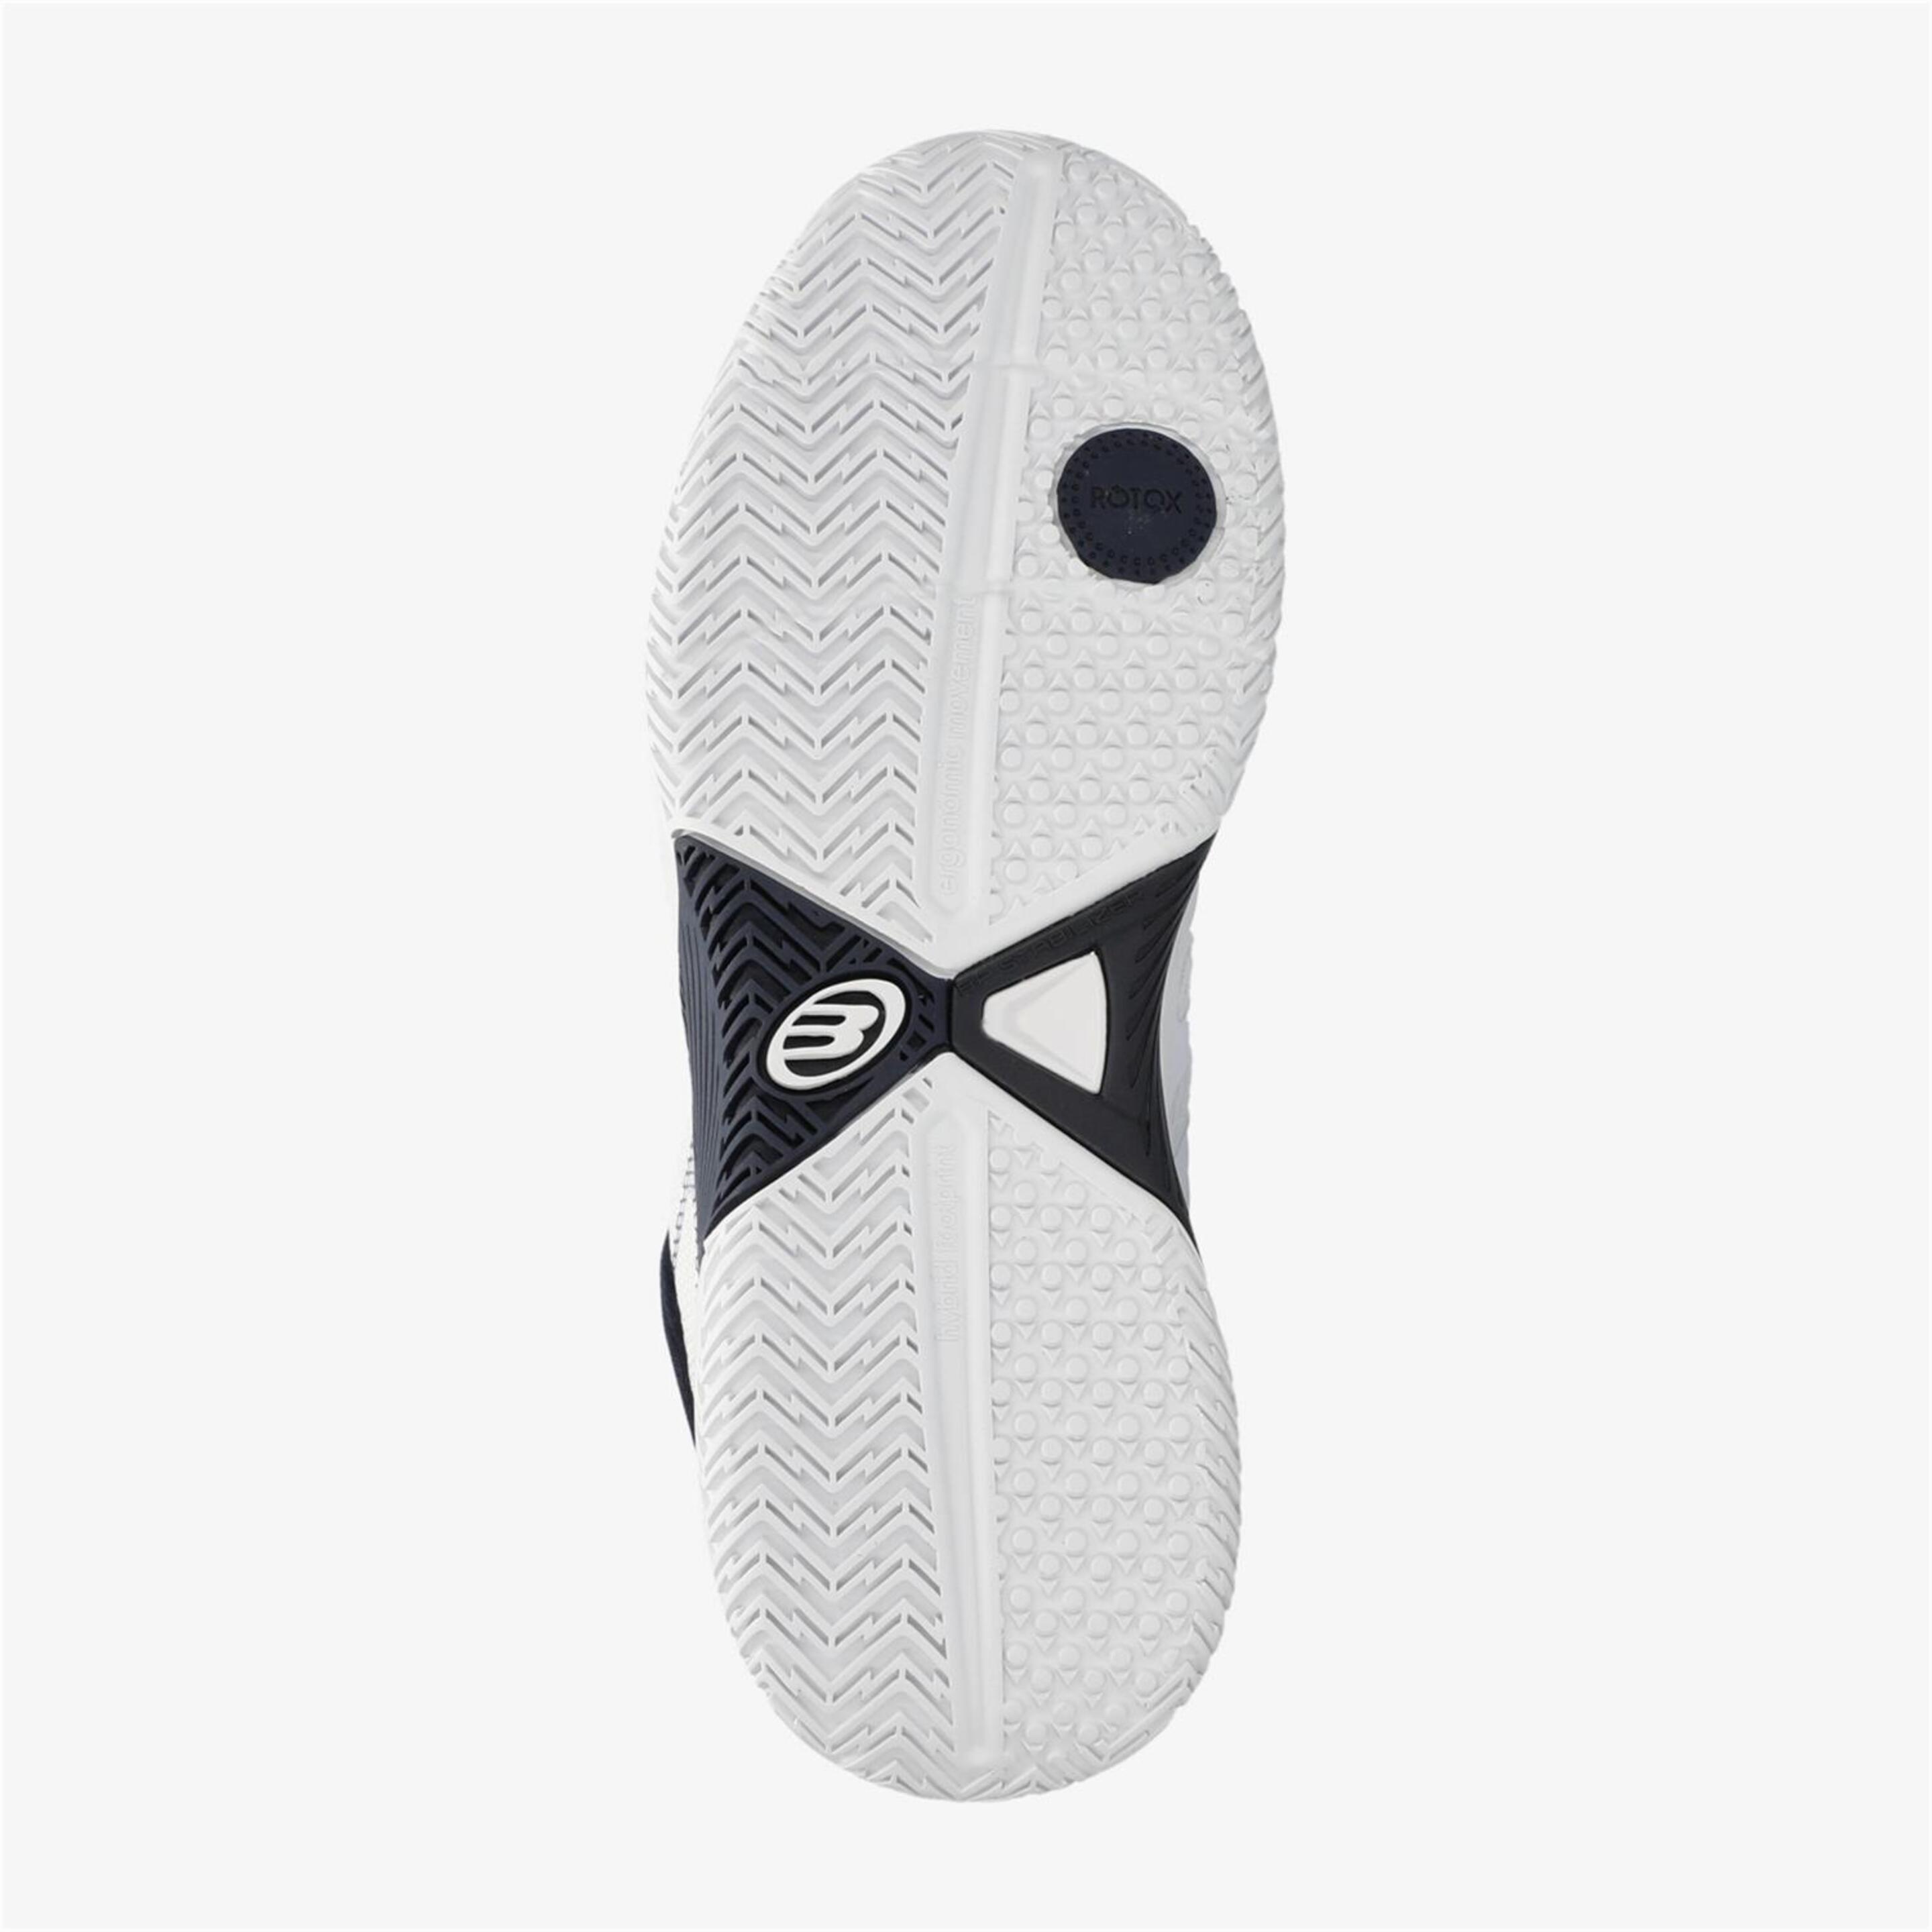 Bullpadel Prf Comfort - Blanco - Zapatillas Pádel Mujer | Sprinter